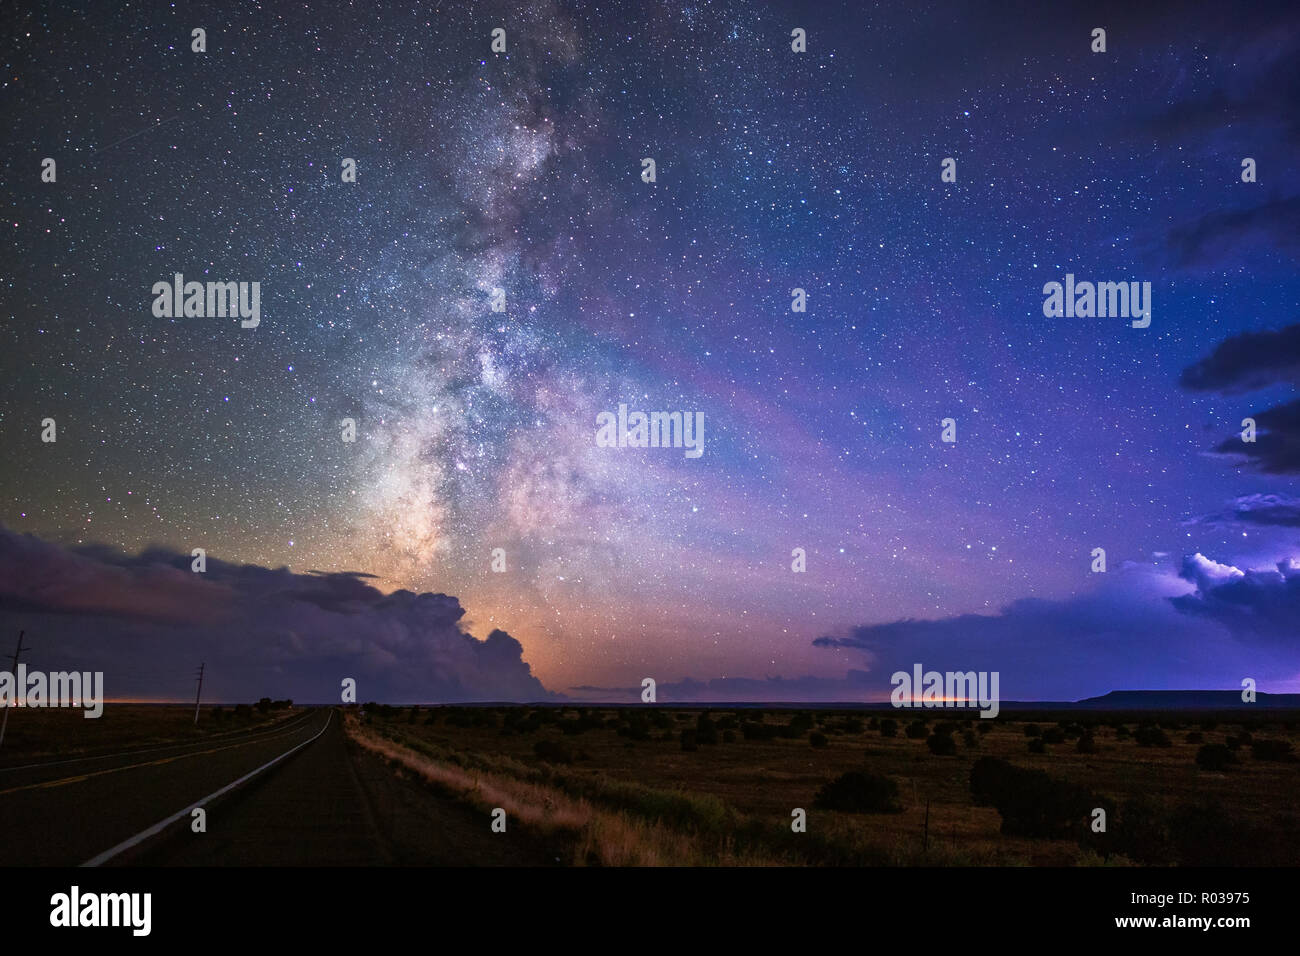 The Milky Way galaxy and stars with storms in the night sky near Winslow, Arizona Stock Photo